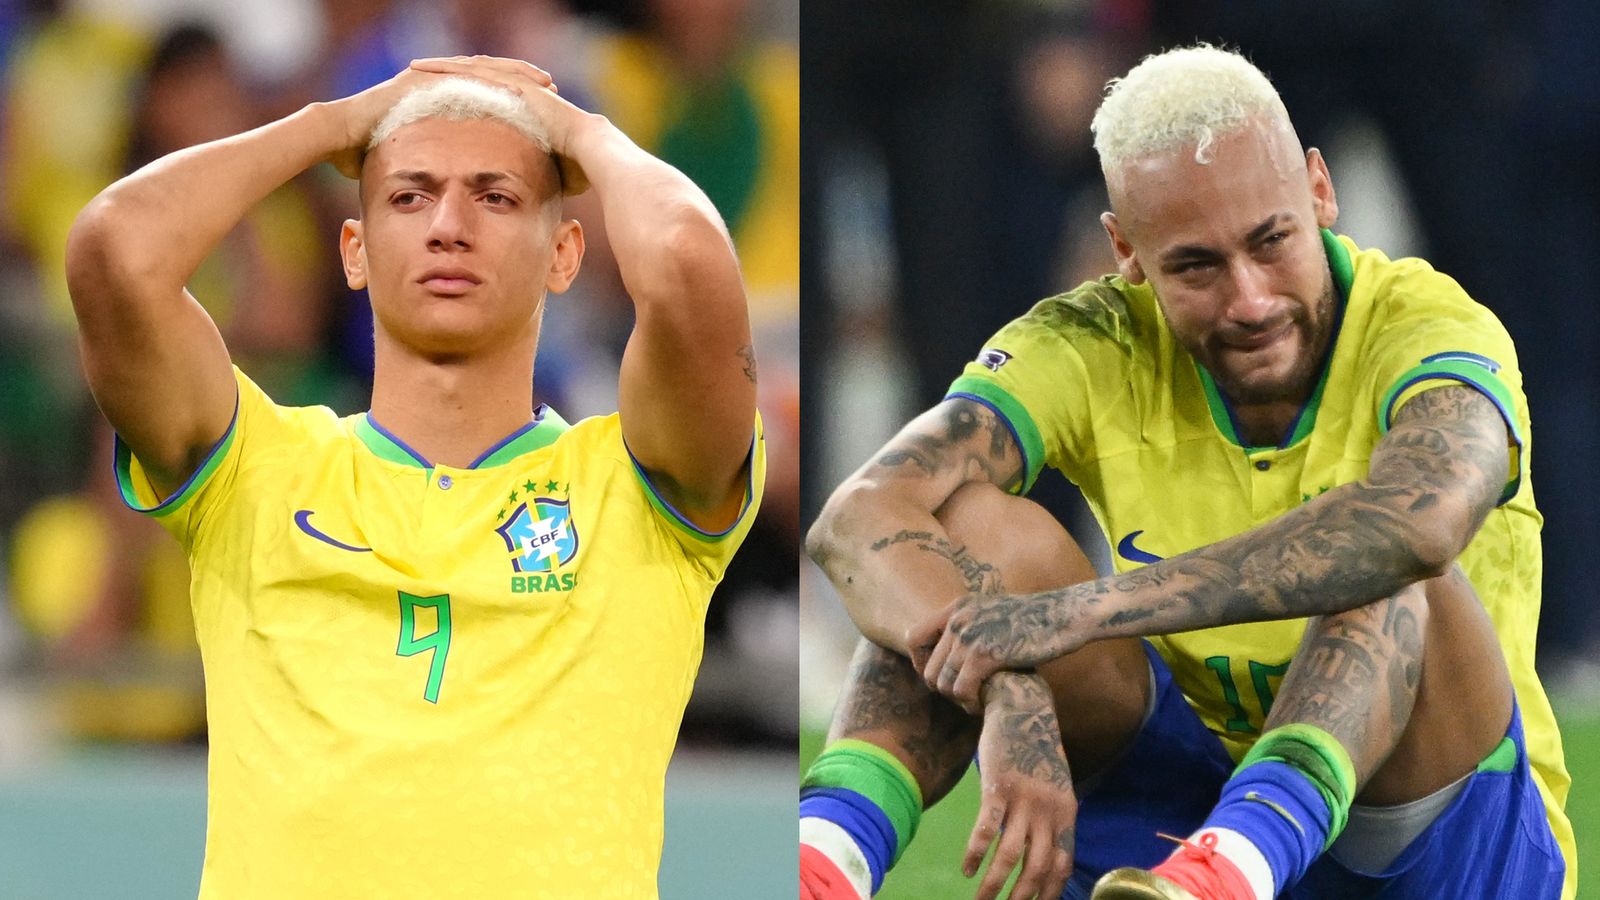 Croatia Vs Brazil Highlights